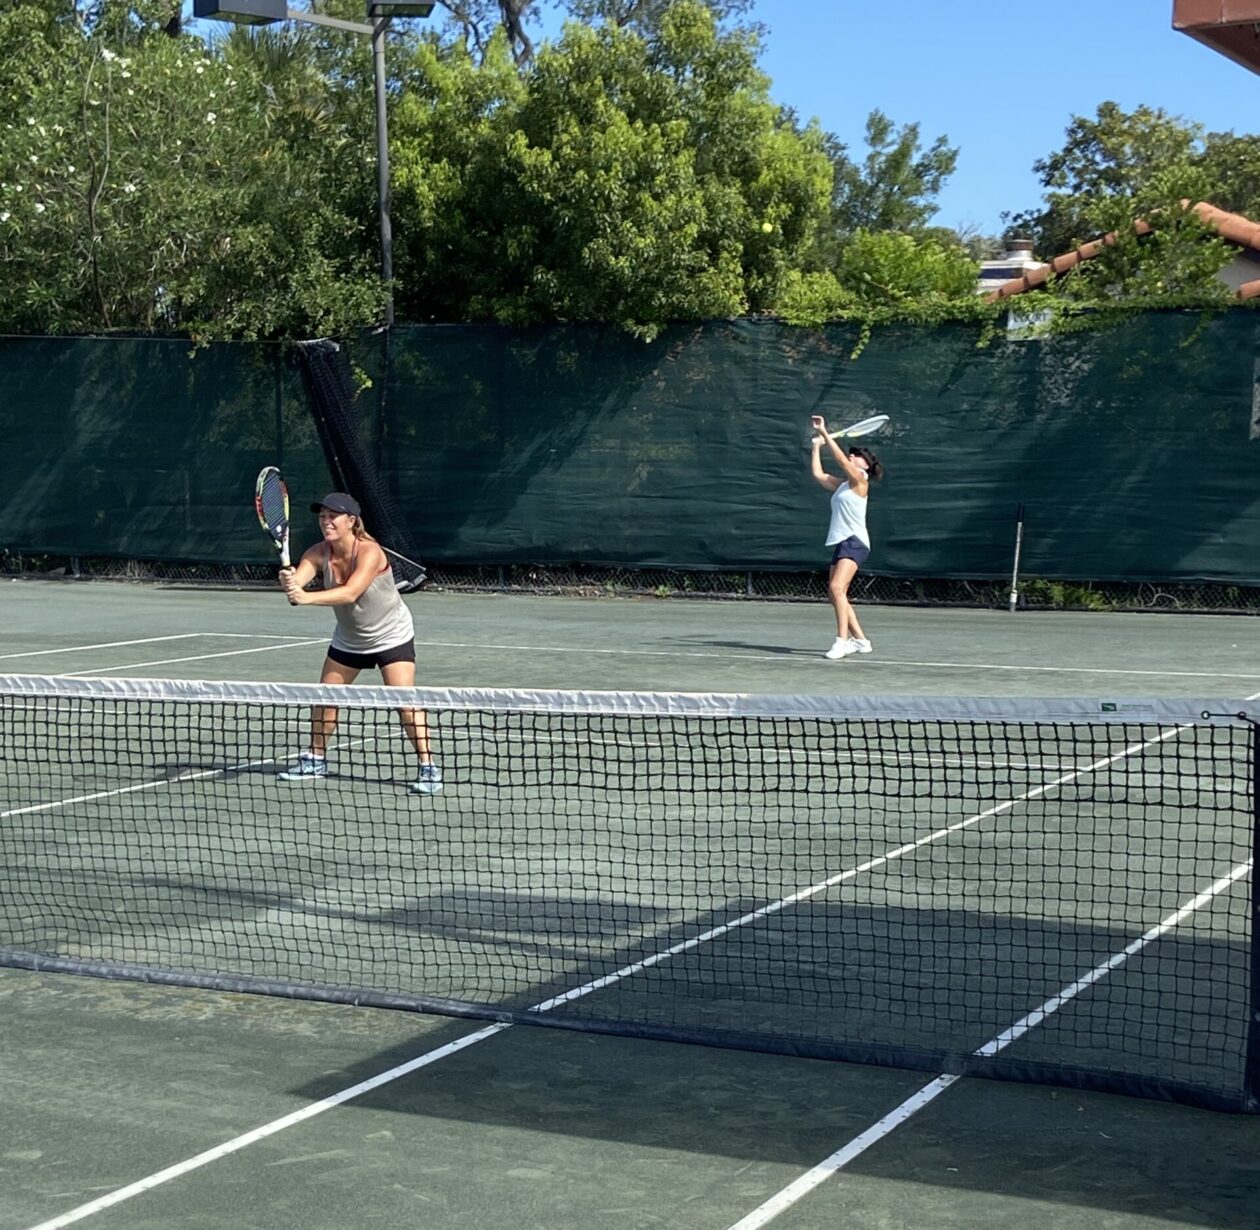 A tennis court with a net.